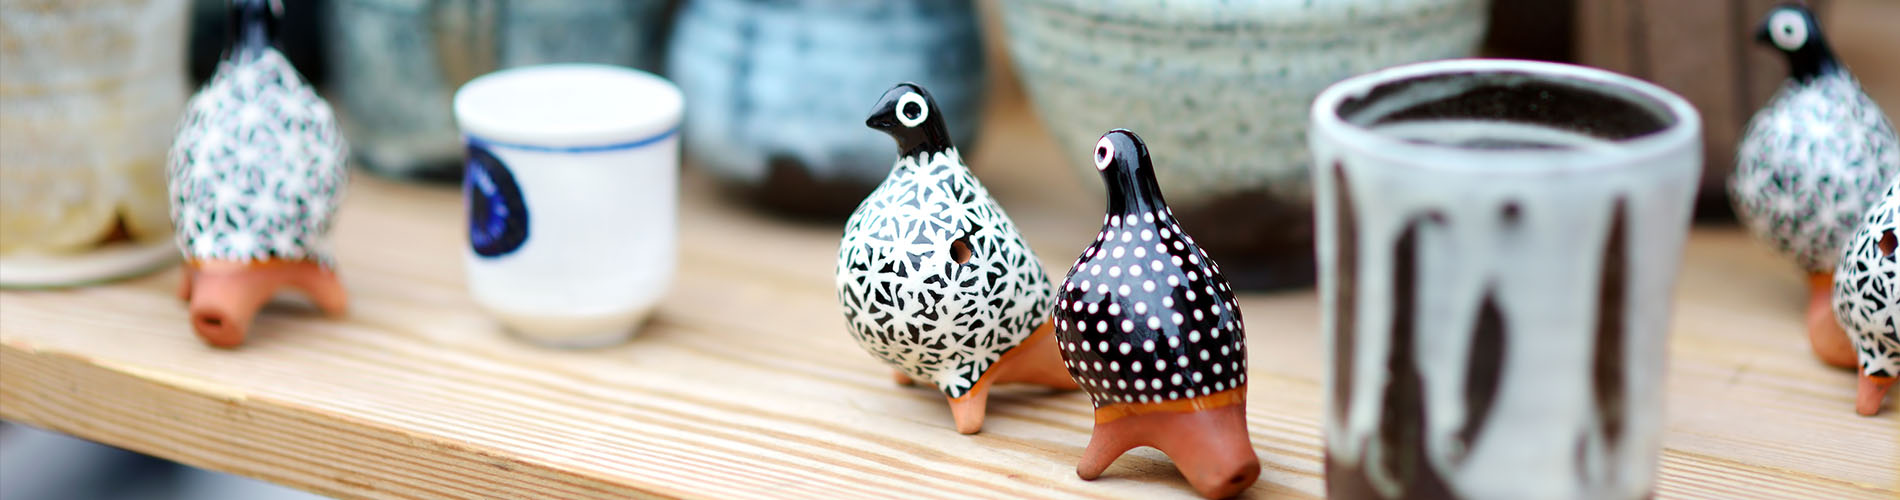 Ceramic birds on display at craft fair